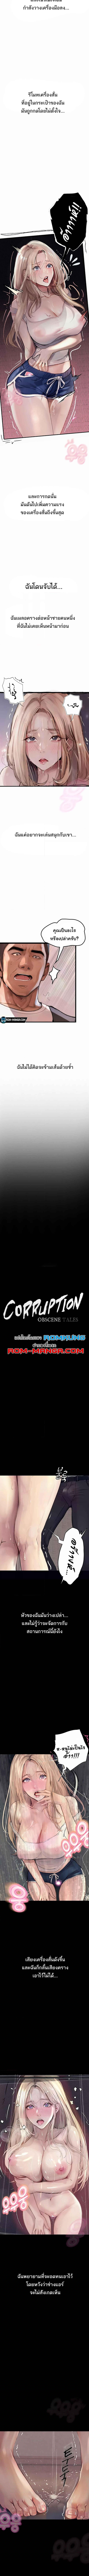 Corruption Obscene Tales 2 4